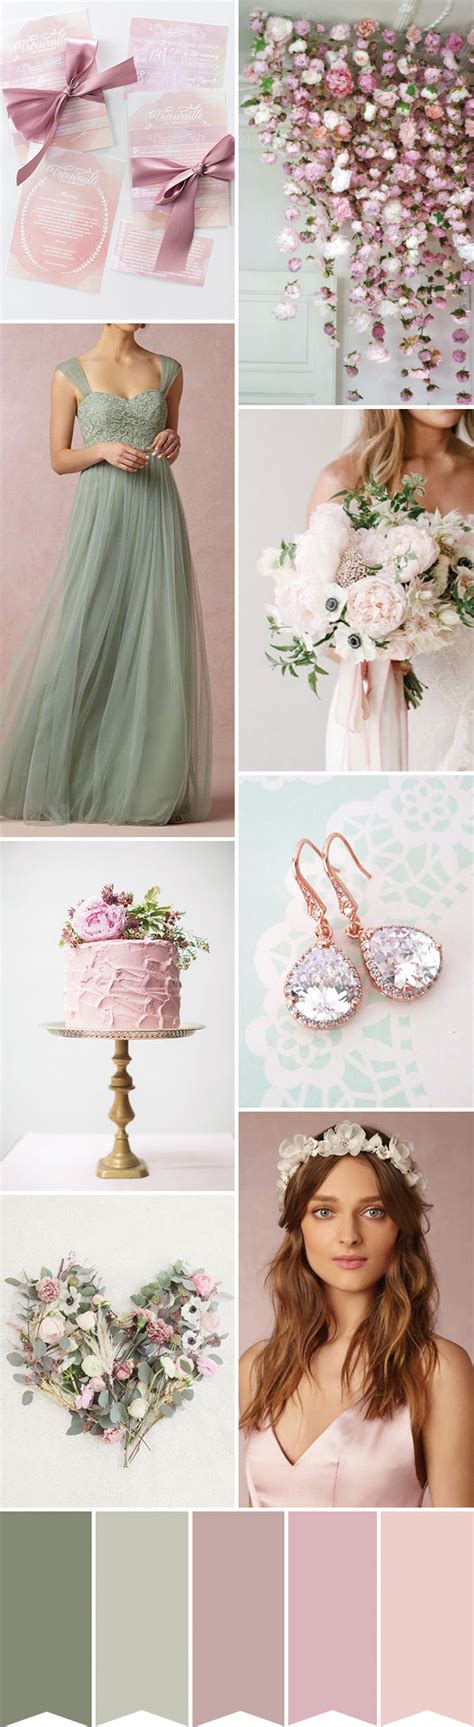 spring awakening pretty pink sage and white wedding inspiration ireland